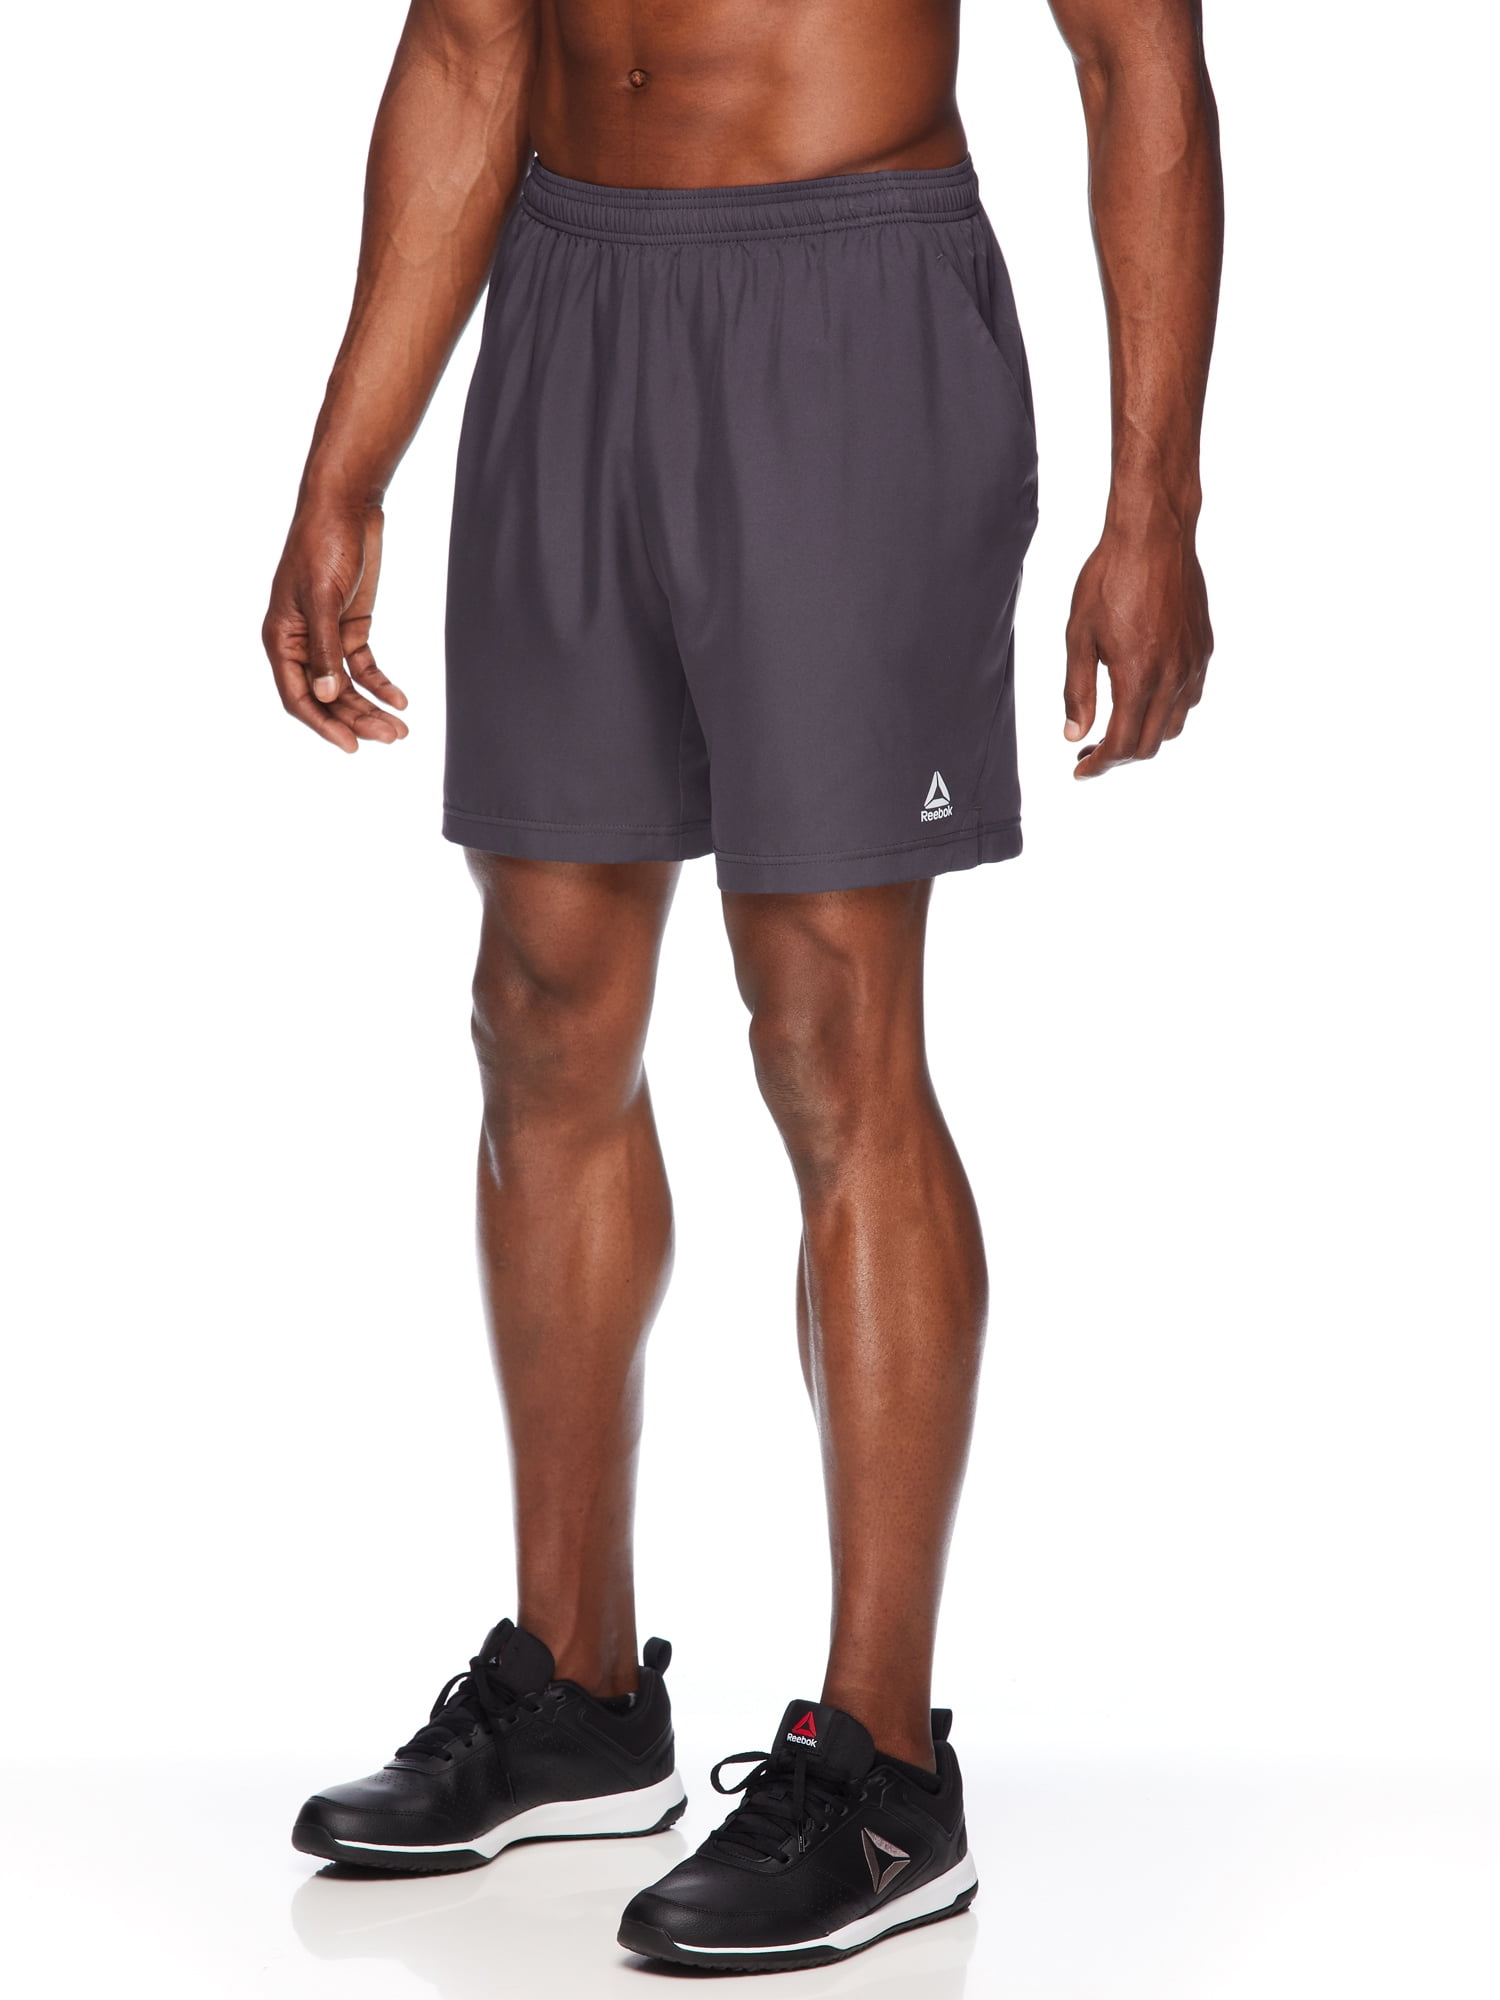 Reebok Men's Fast Runner Shorts - Walmart.com